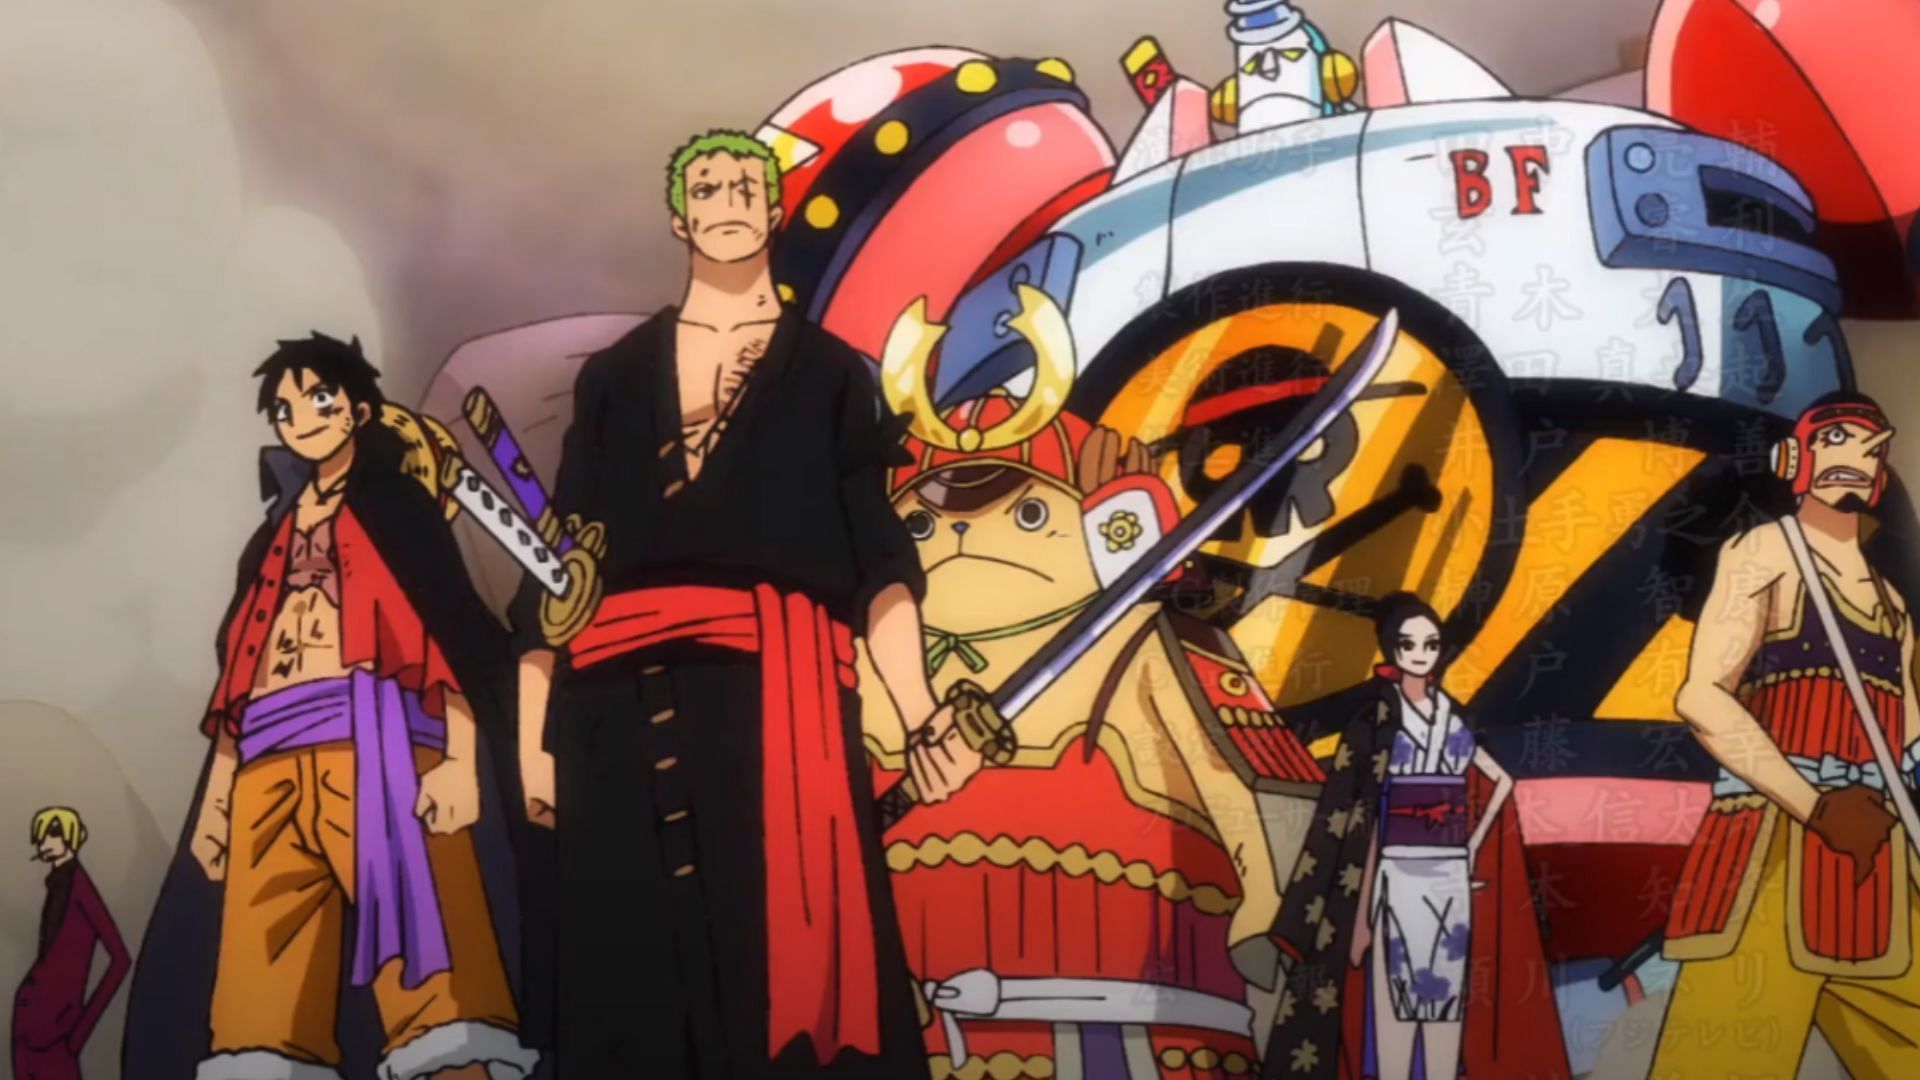 One Piece Episode 1070 teaser shows Luffy's saddening defeat